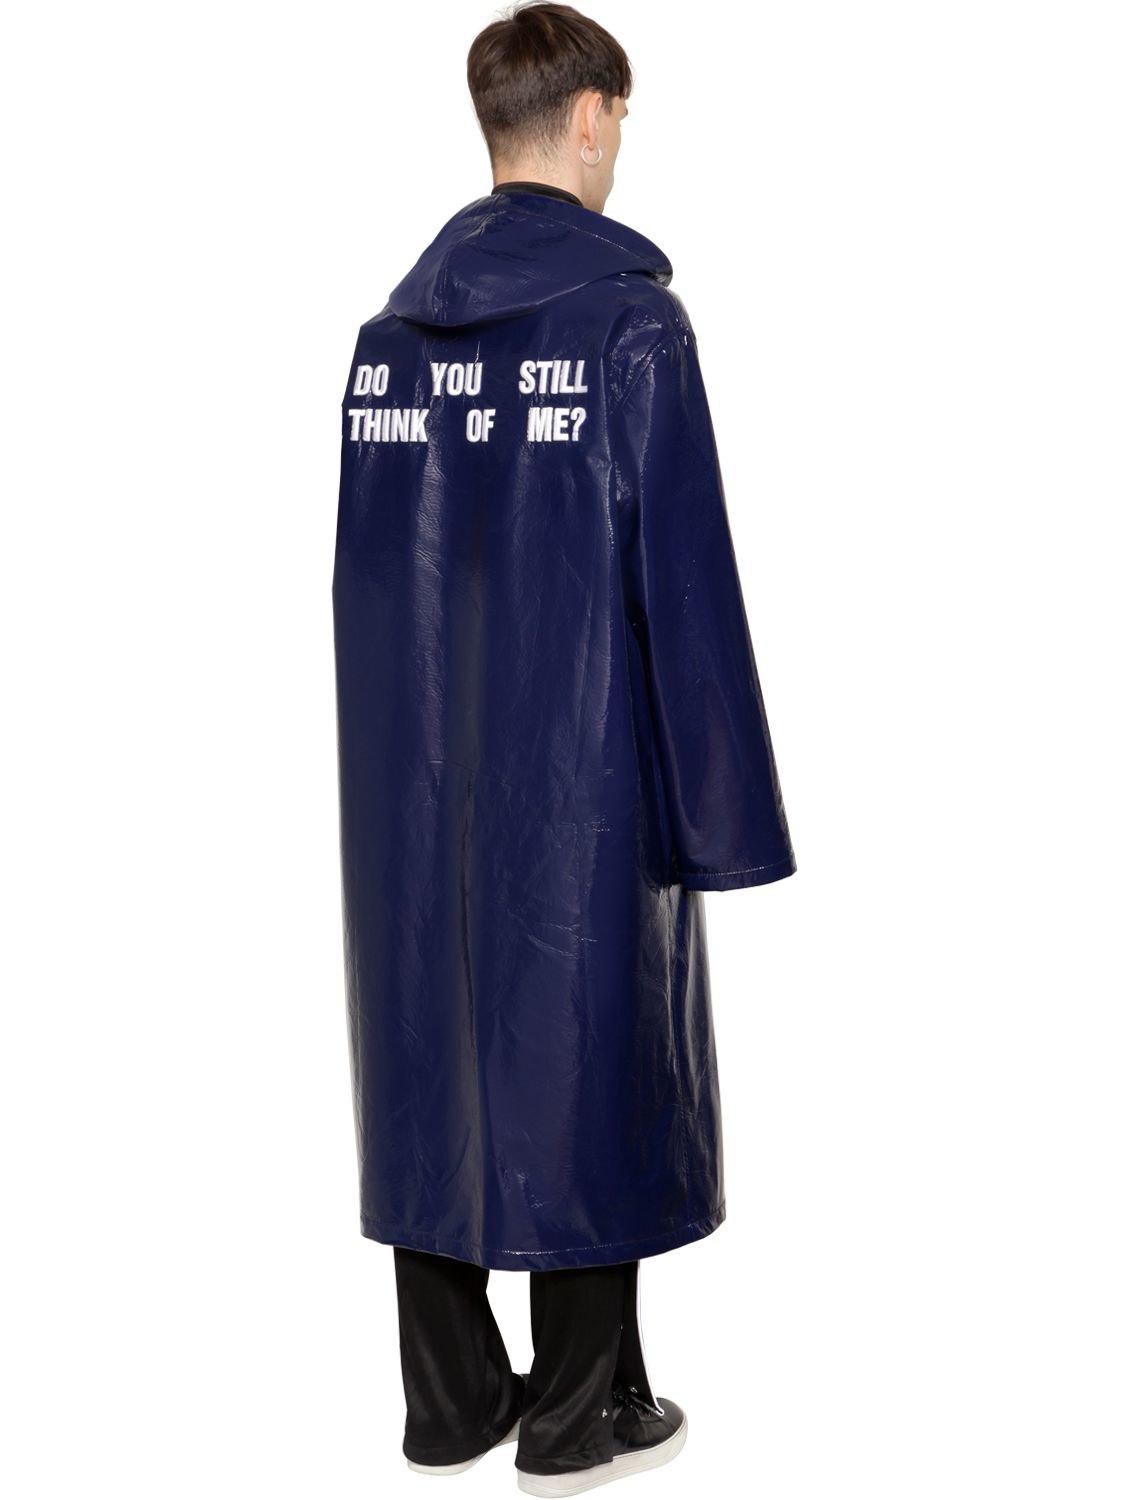 MISBHV Synthetic Oversize Do You Still Shiny Raincoat in Navy (Blue) for  Men - Lyst